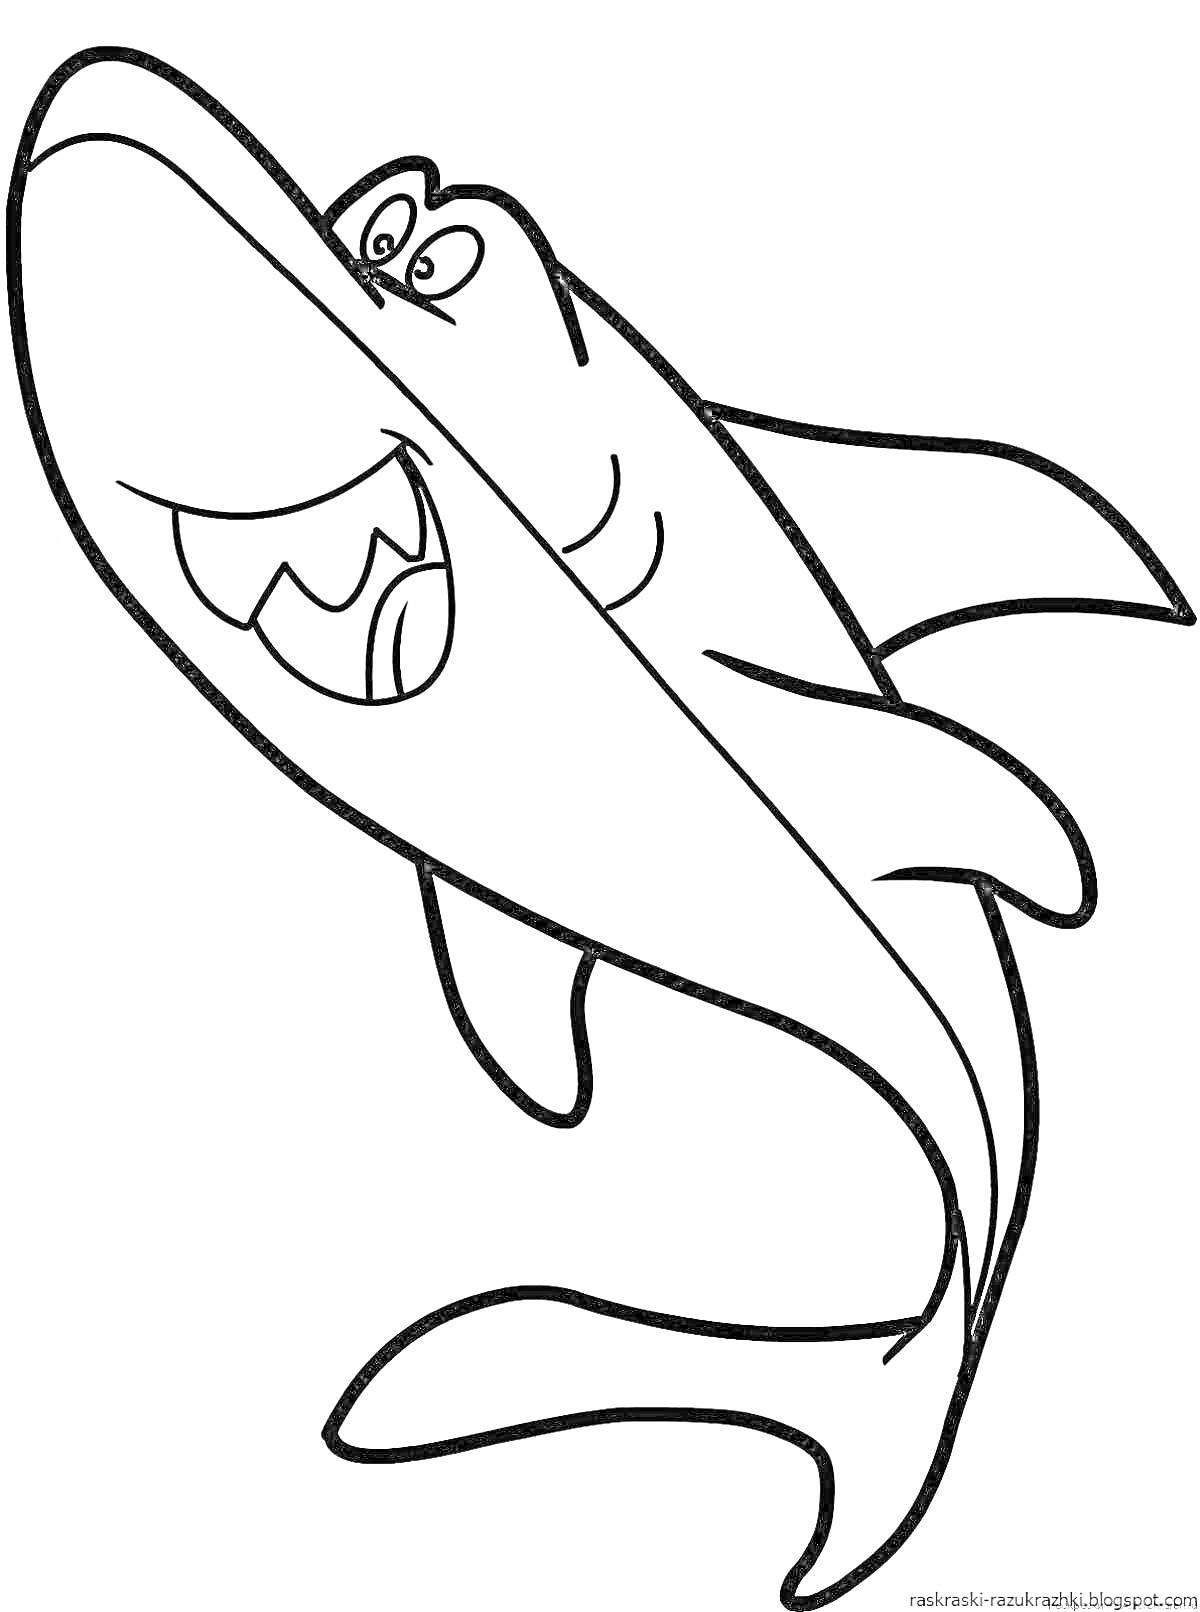 Раскраска Раскраска с улыбающимся акуленком